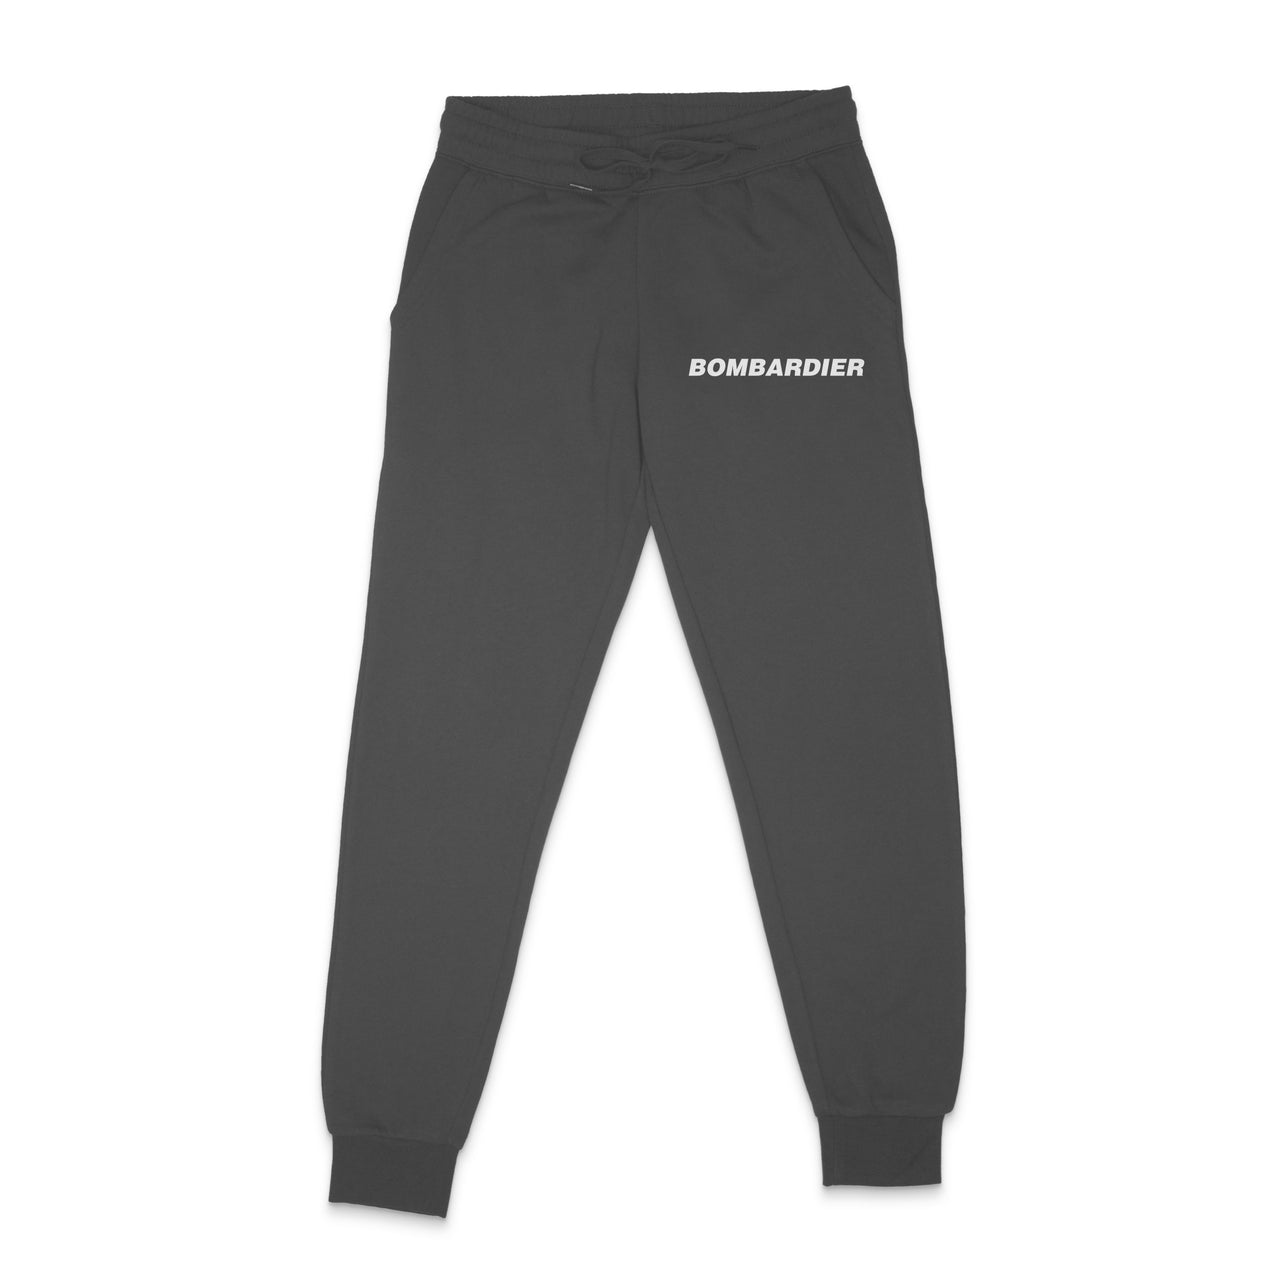 Bombardier & Text Designed Sweatpants